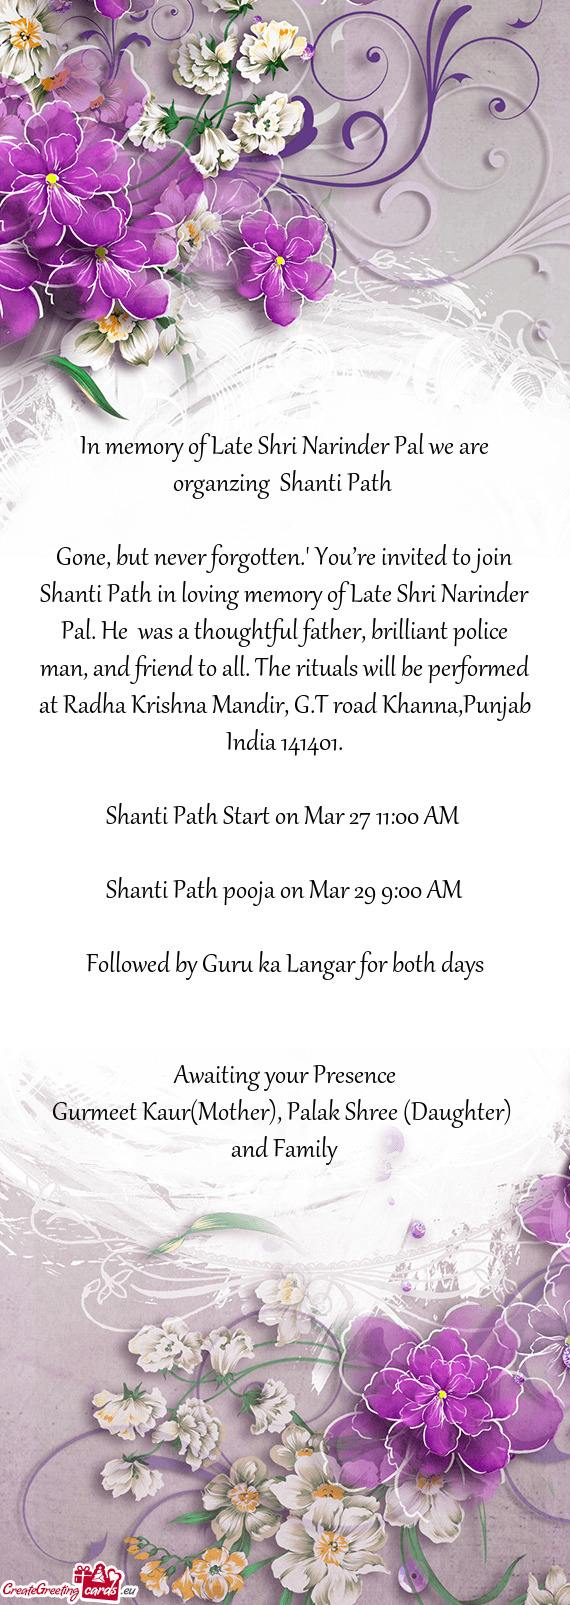 In memory of Late Shri Narinder Pal we are organzing Shanti Path